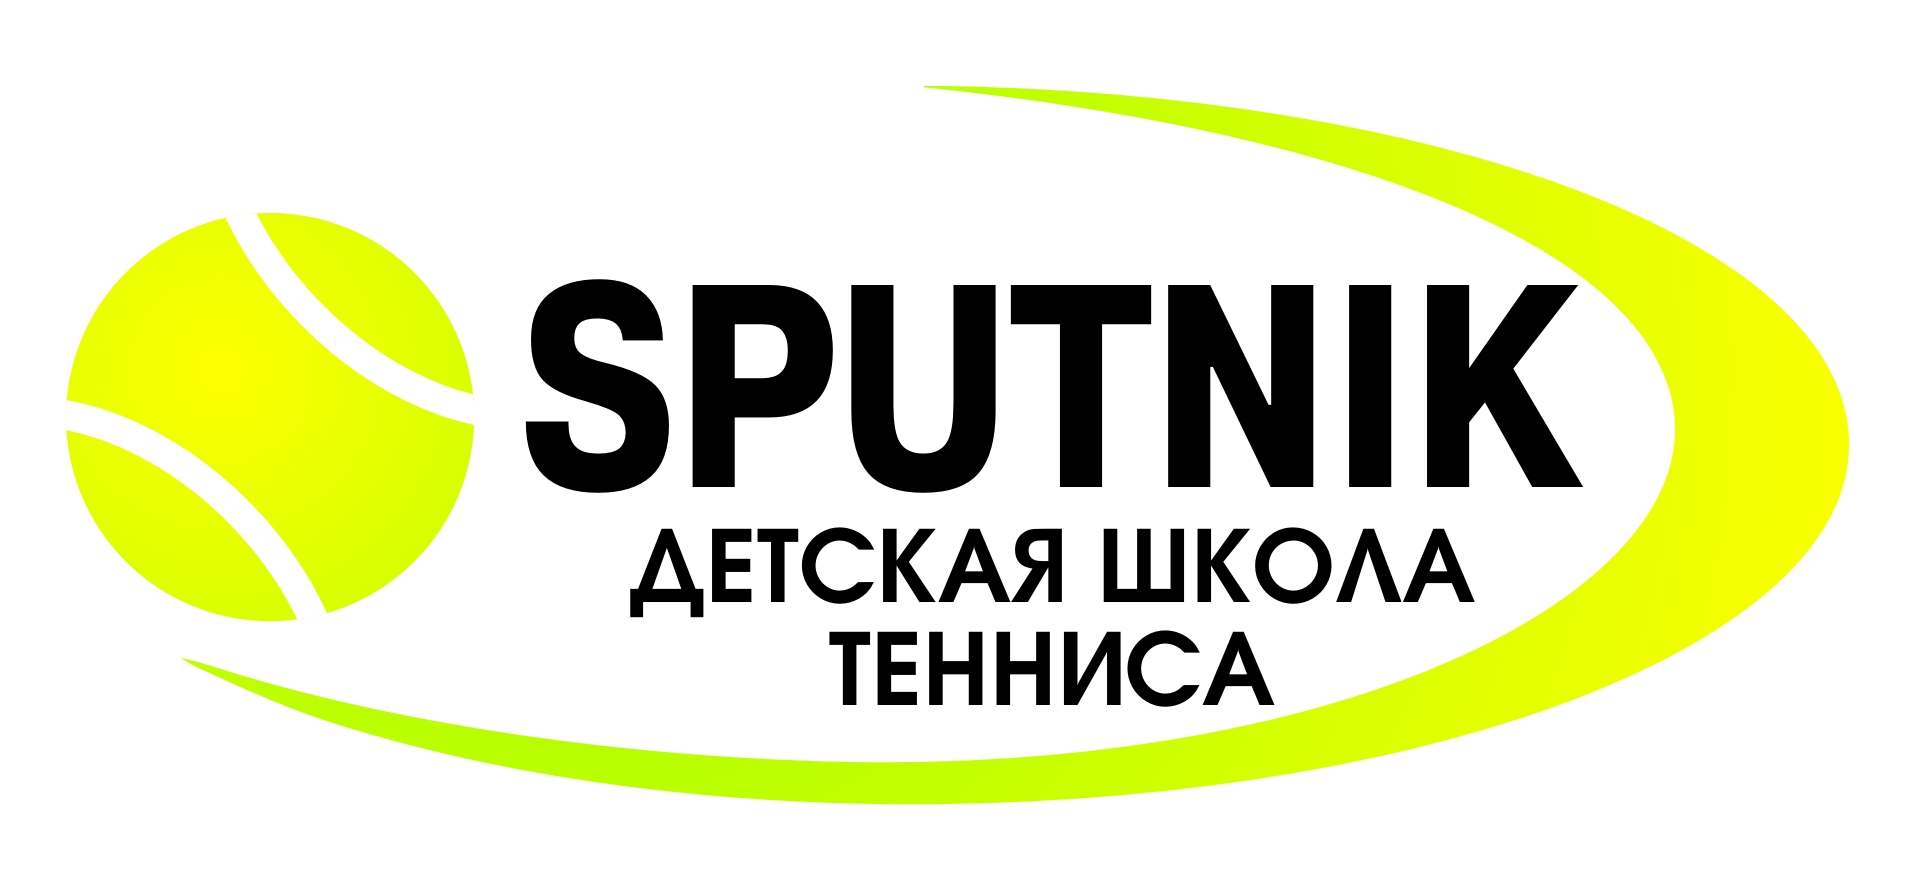 Детская Школа Тенниса "SPUTNIK"